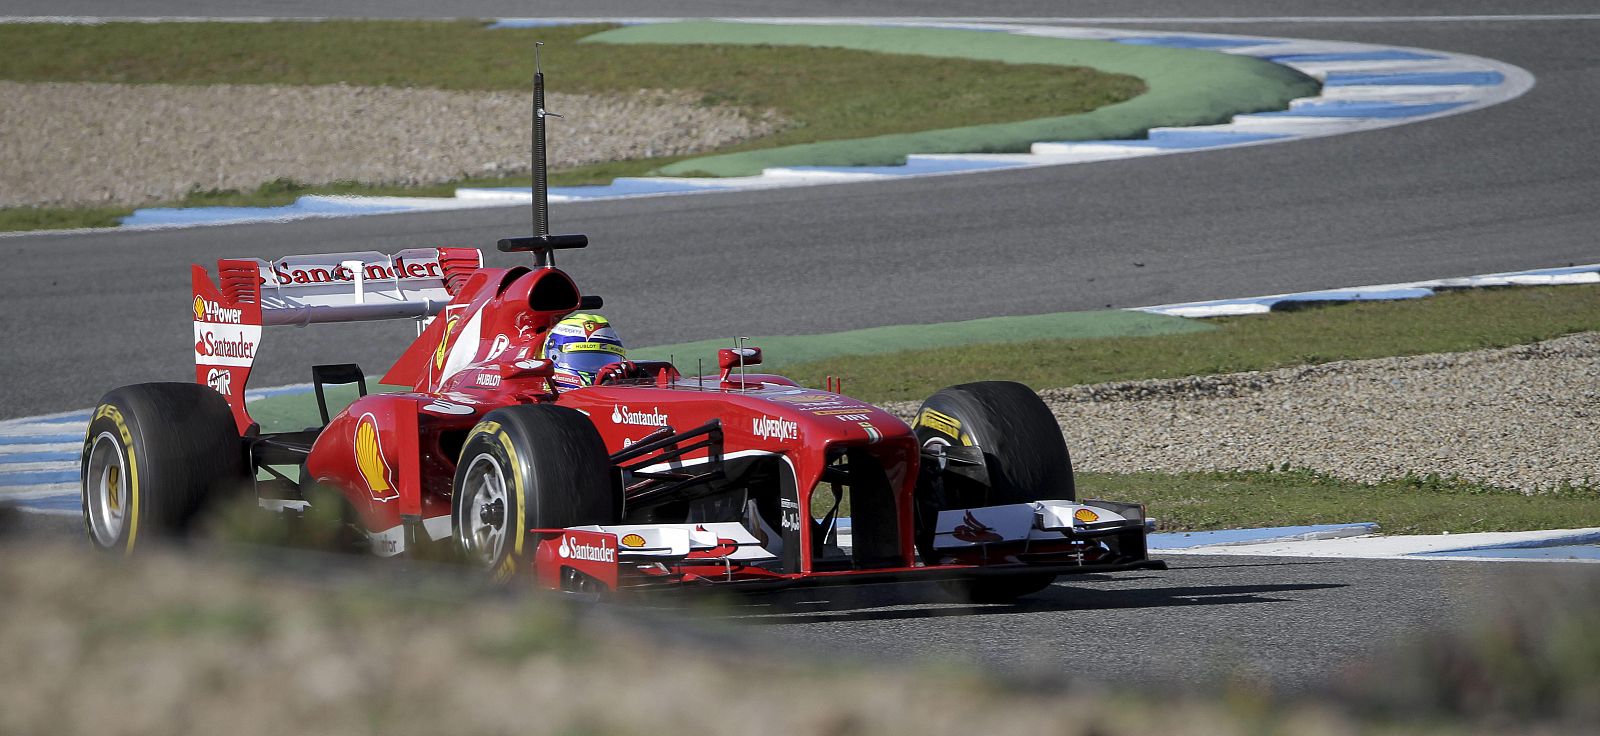 El piloto brasileño, Felipe Massa, del equipo Ferrari, en el Circuito de Jerez de la Frontera (Cádiz).